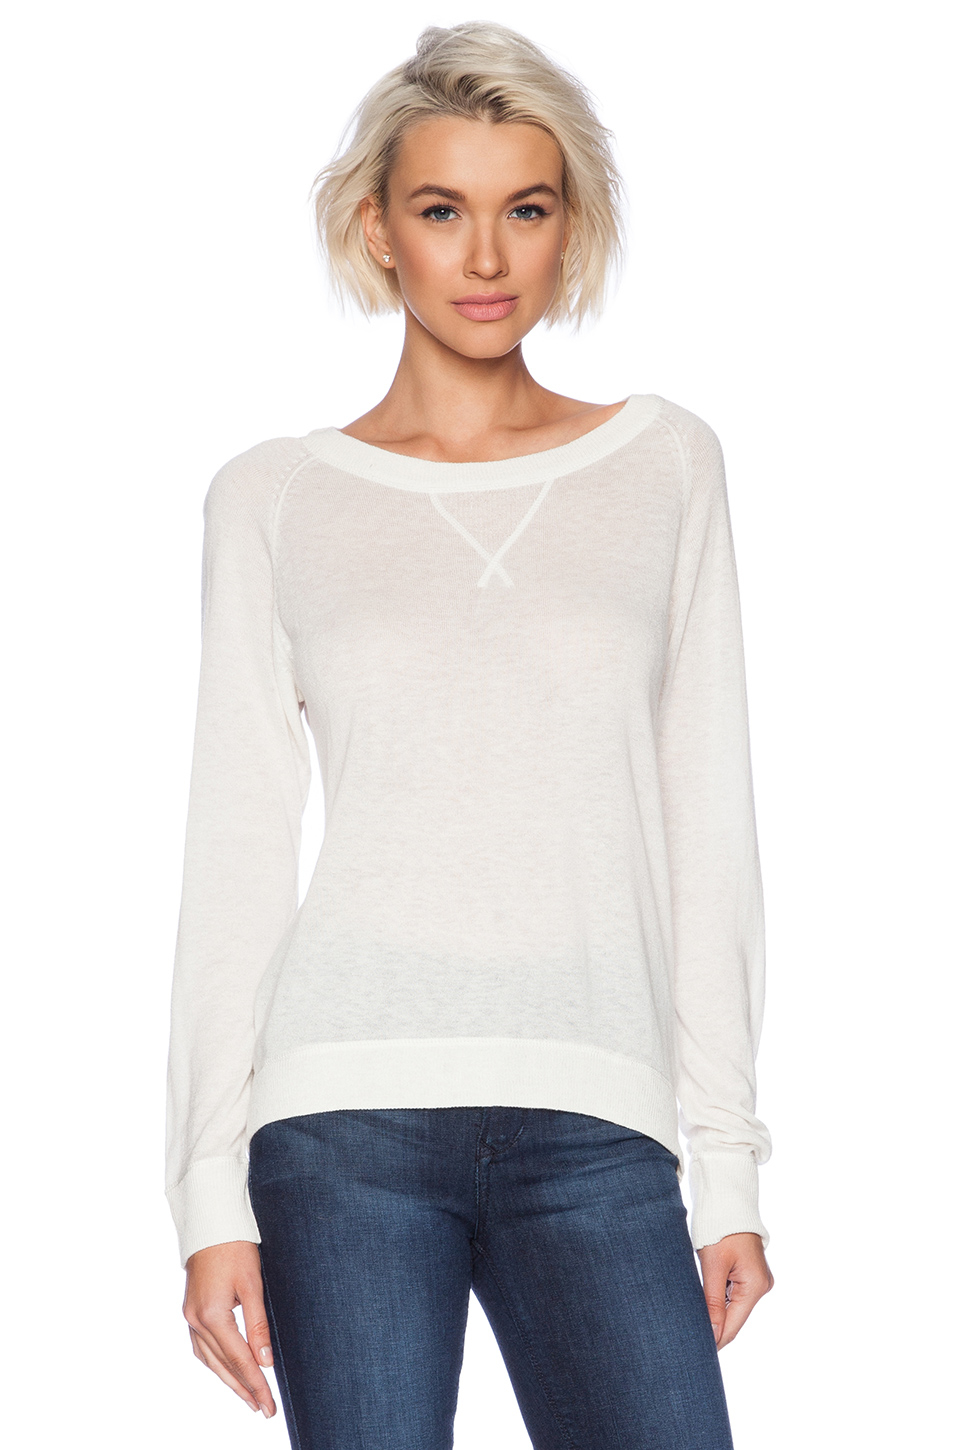 C&c california Cashmere Blend Sweater in White | Lyst